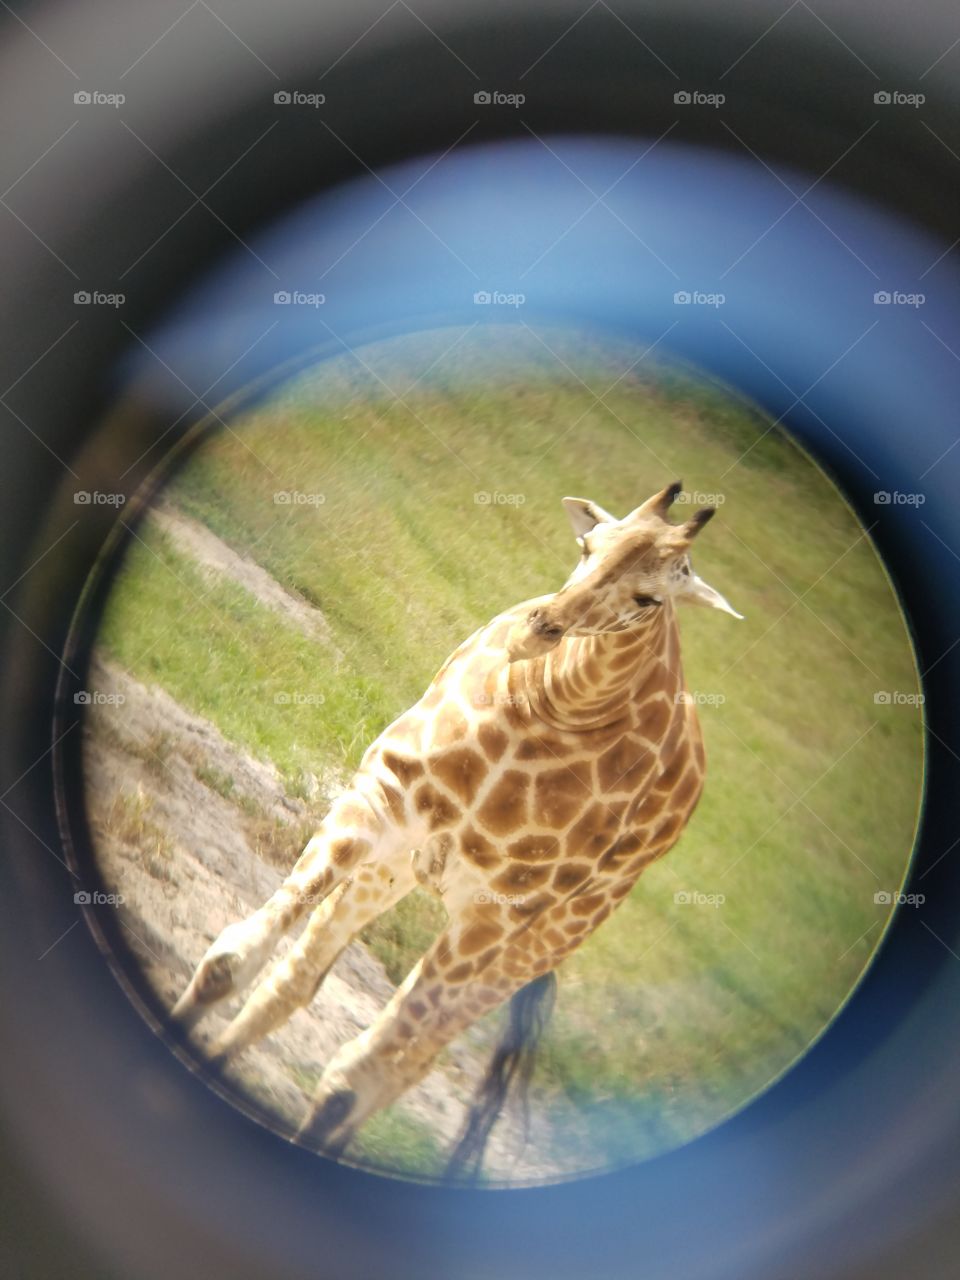 Giraffe through the looking glass